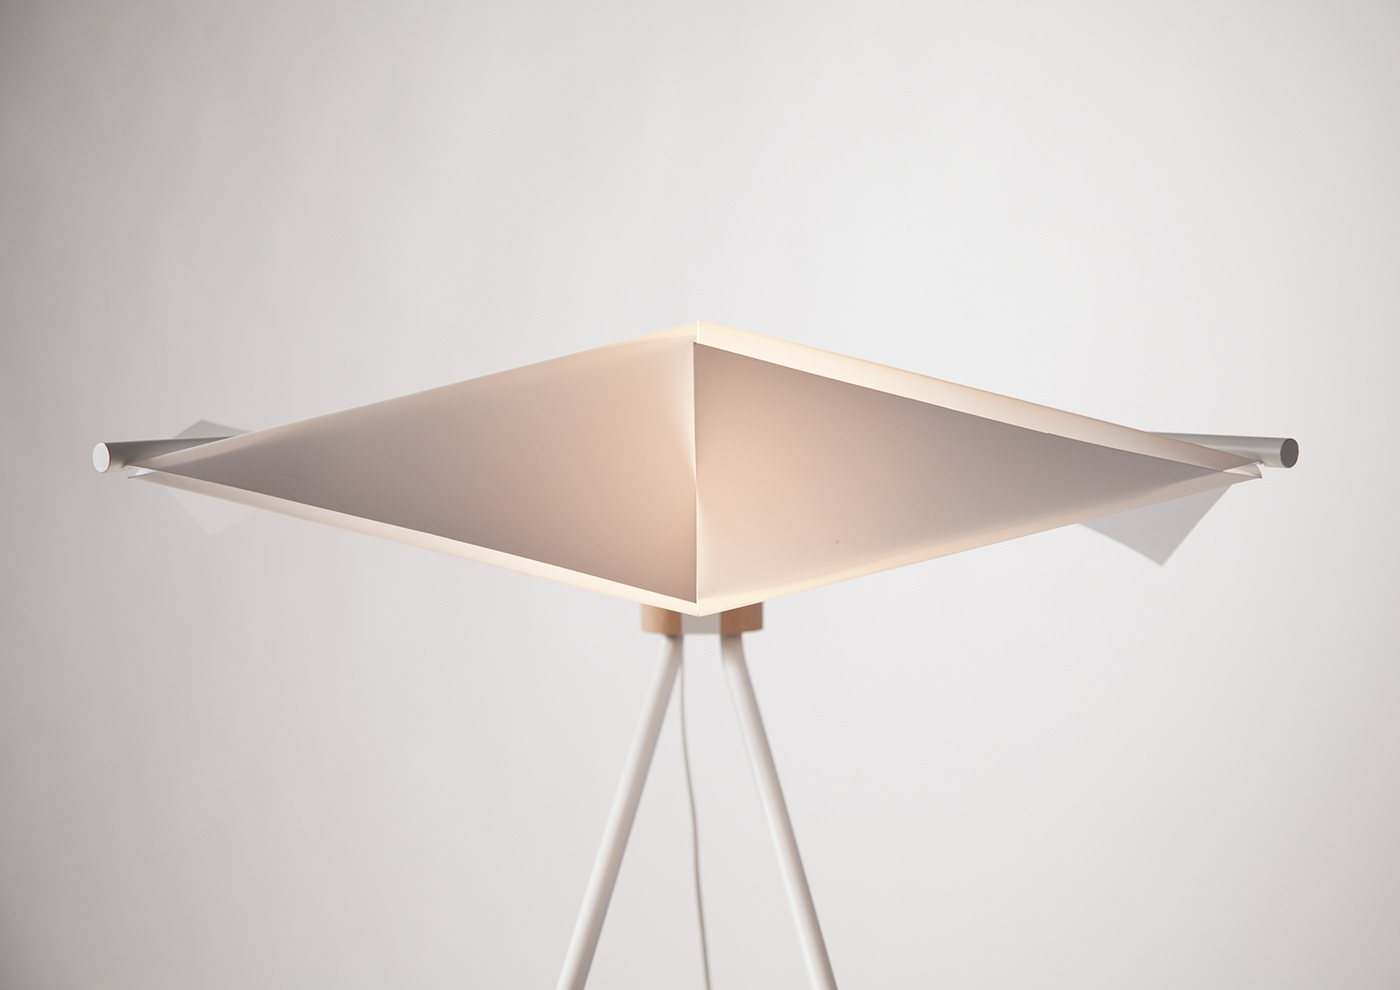 Lamp design origami  light light regulation wood metal minimal floor lamp interiors design